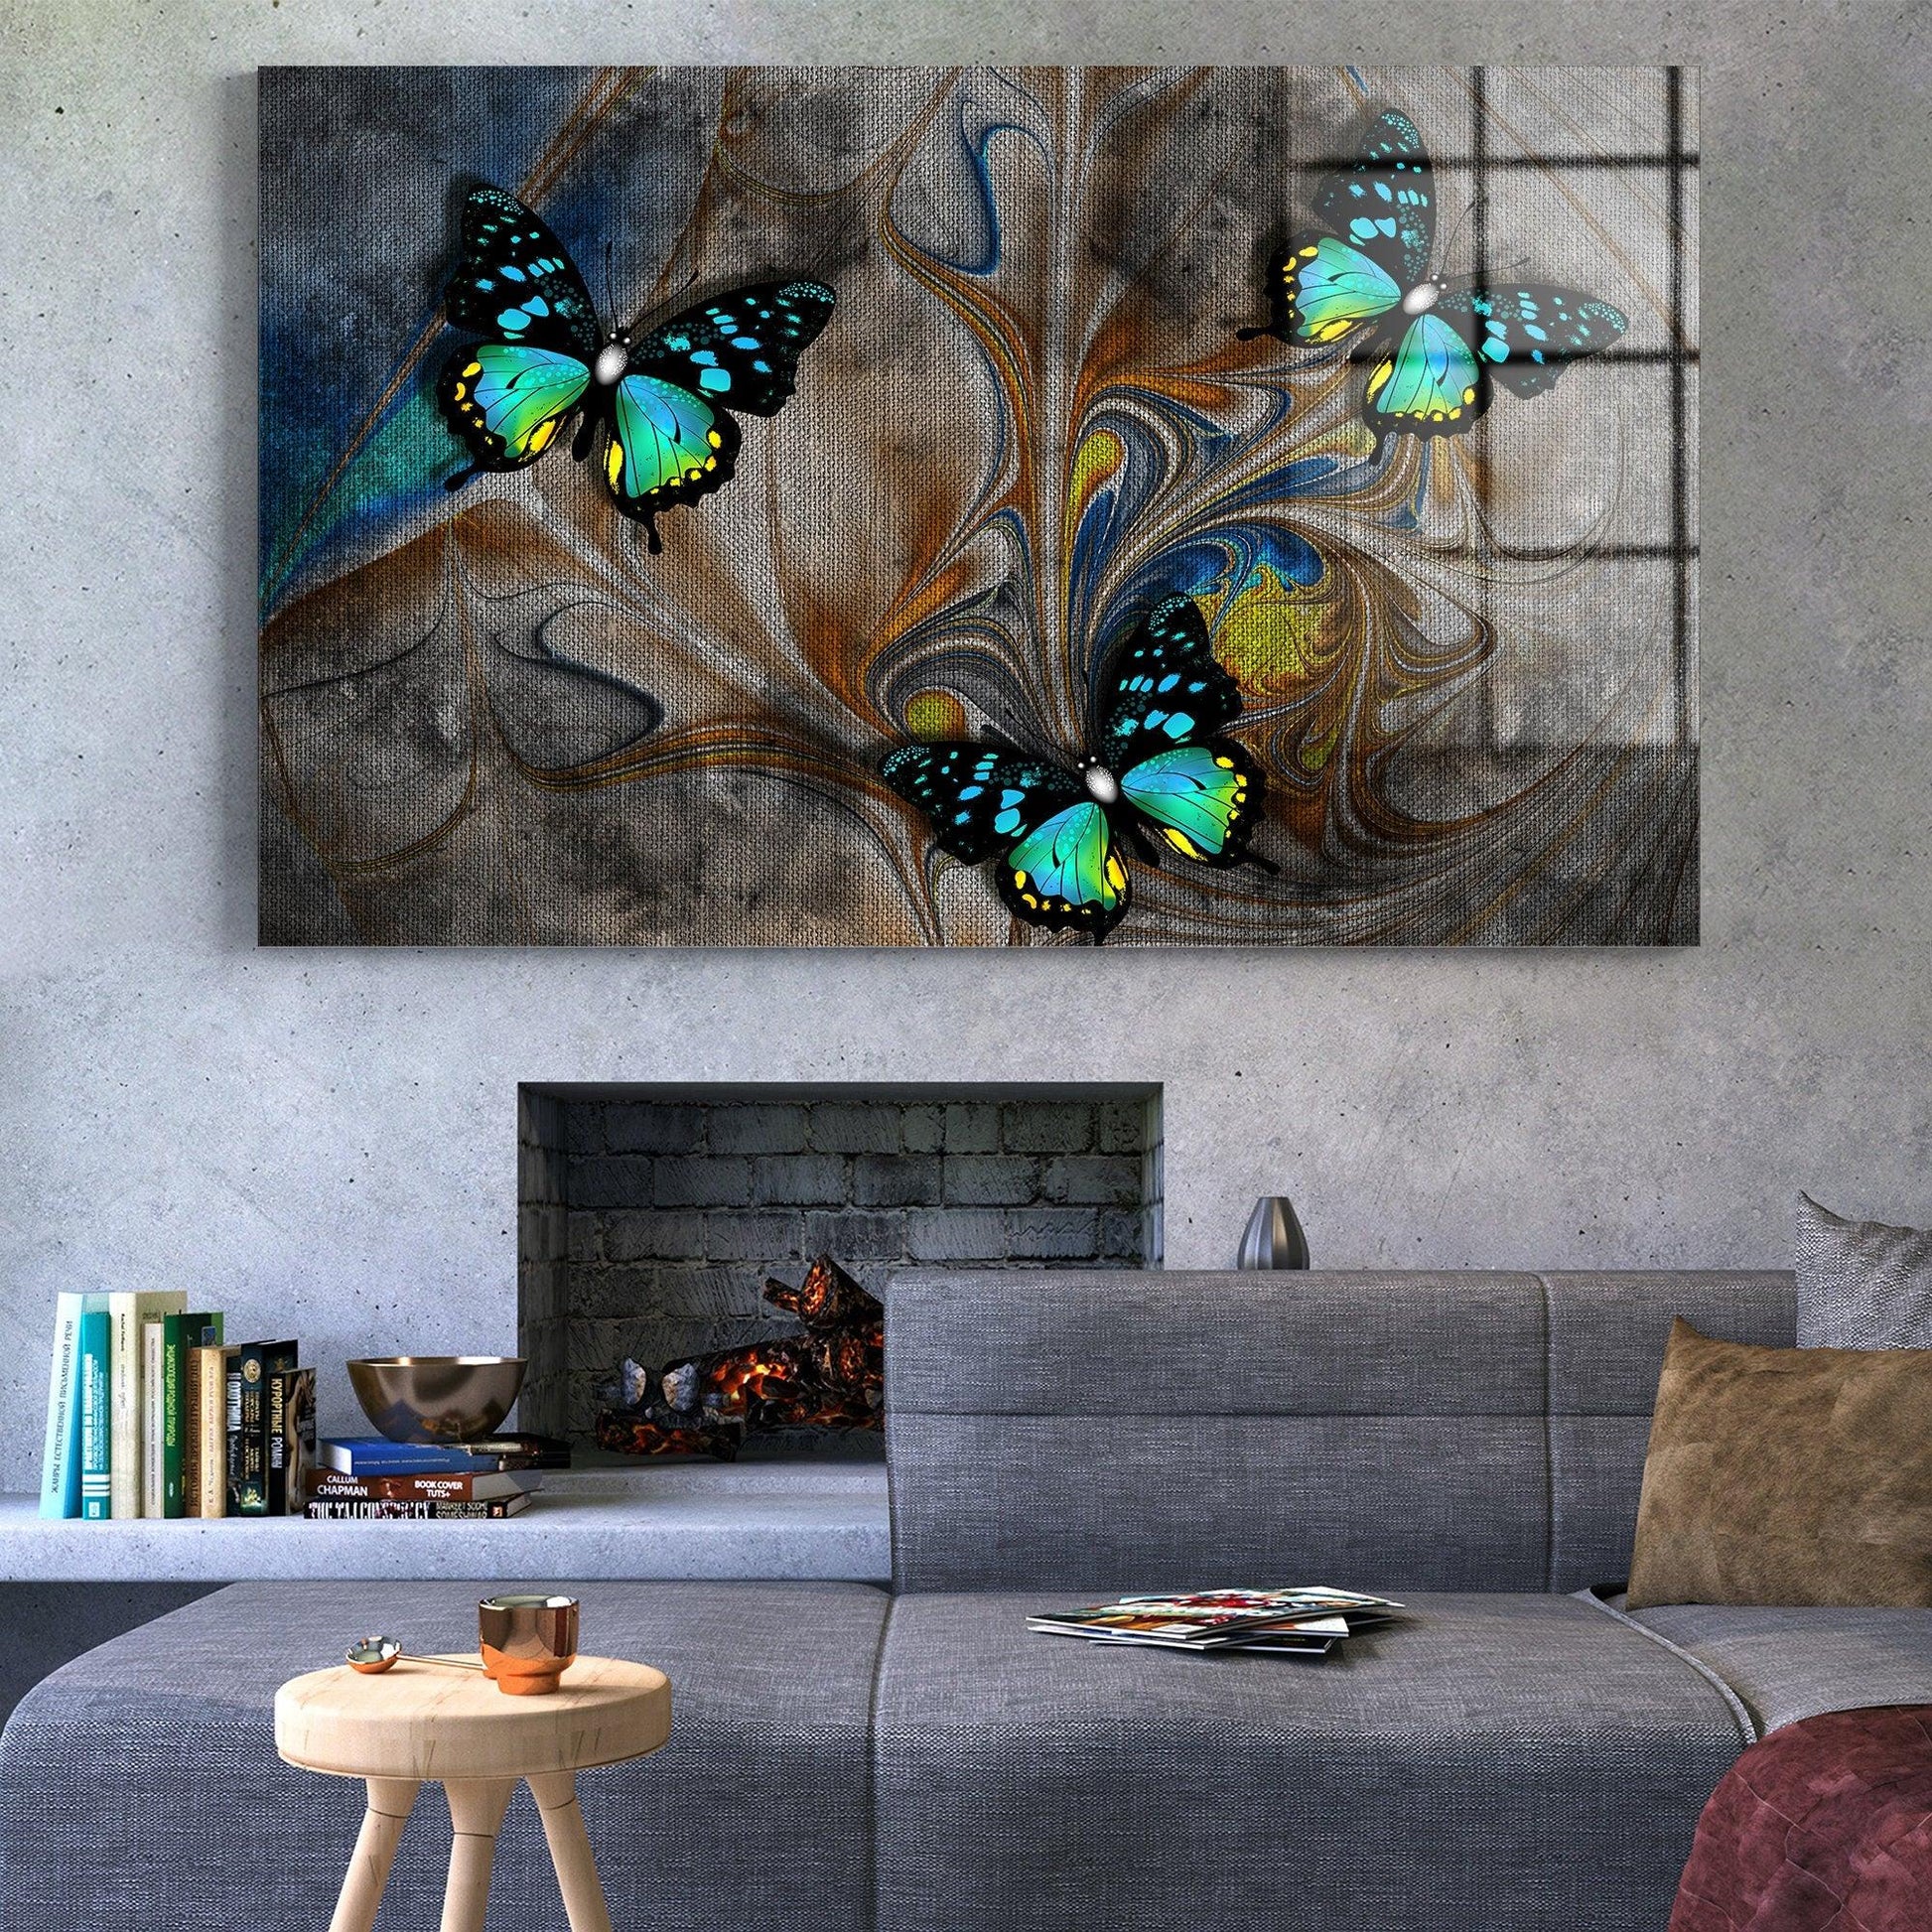 3d Butterflies canvas wall decor| Colorized Glass Printing Wall Art, Glass Wall Decor, acrylic glass wall art, Tempered Glass, abstract art